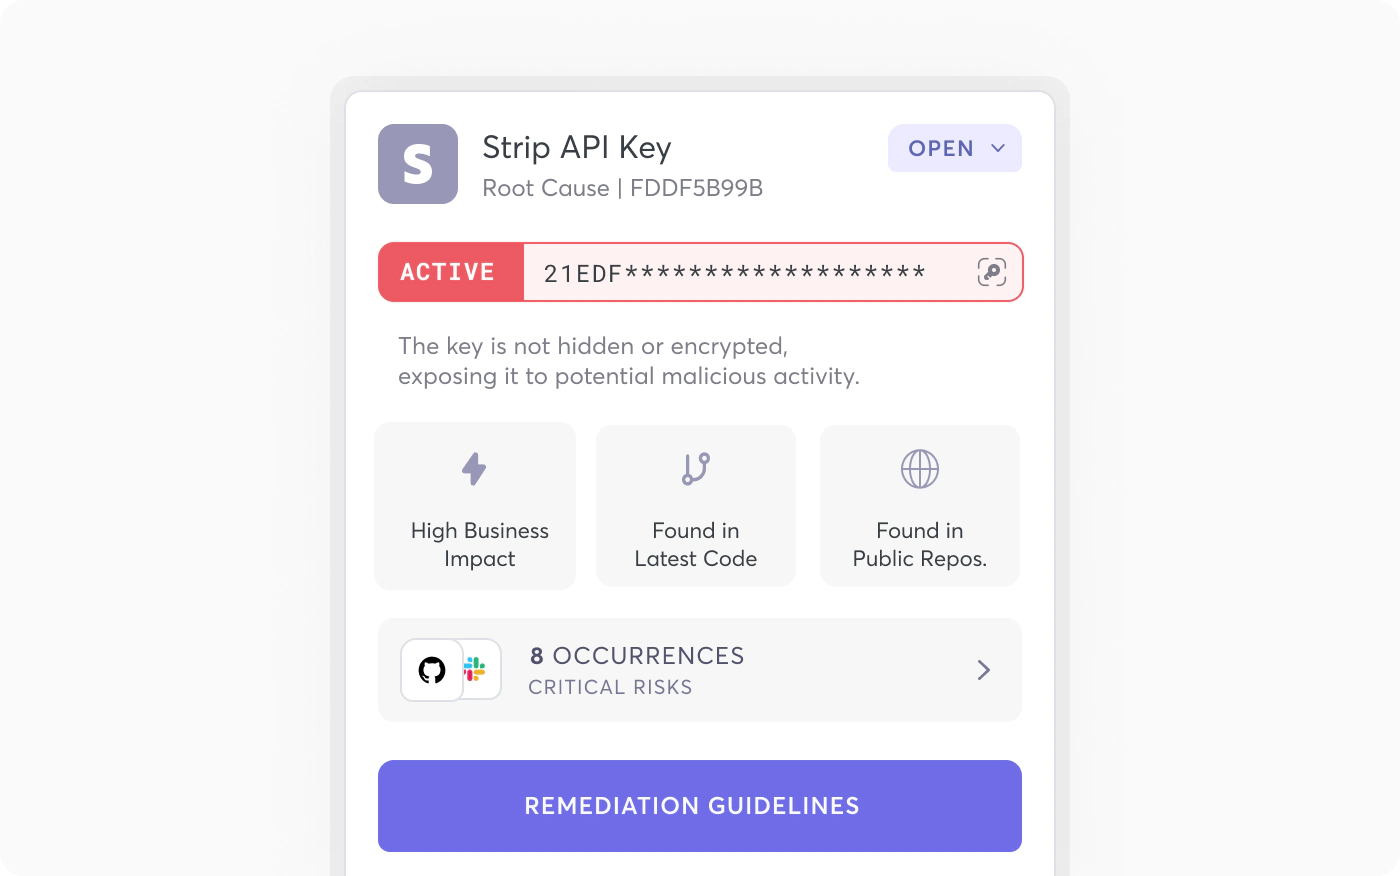 Stipe API Key - Secrets Detection